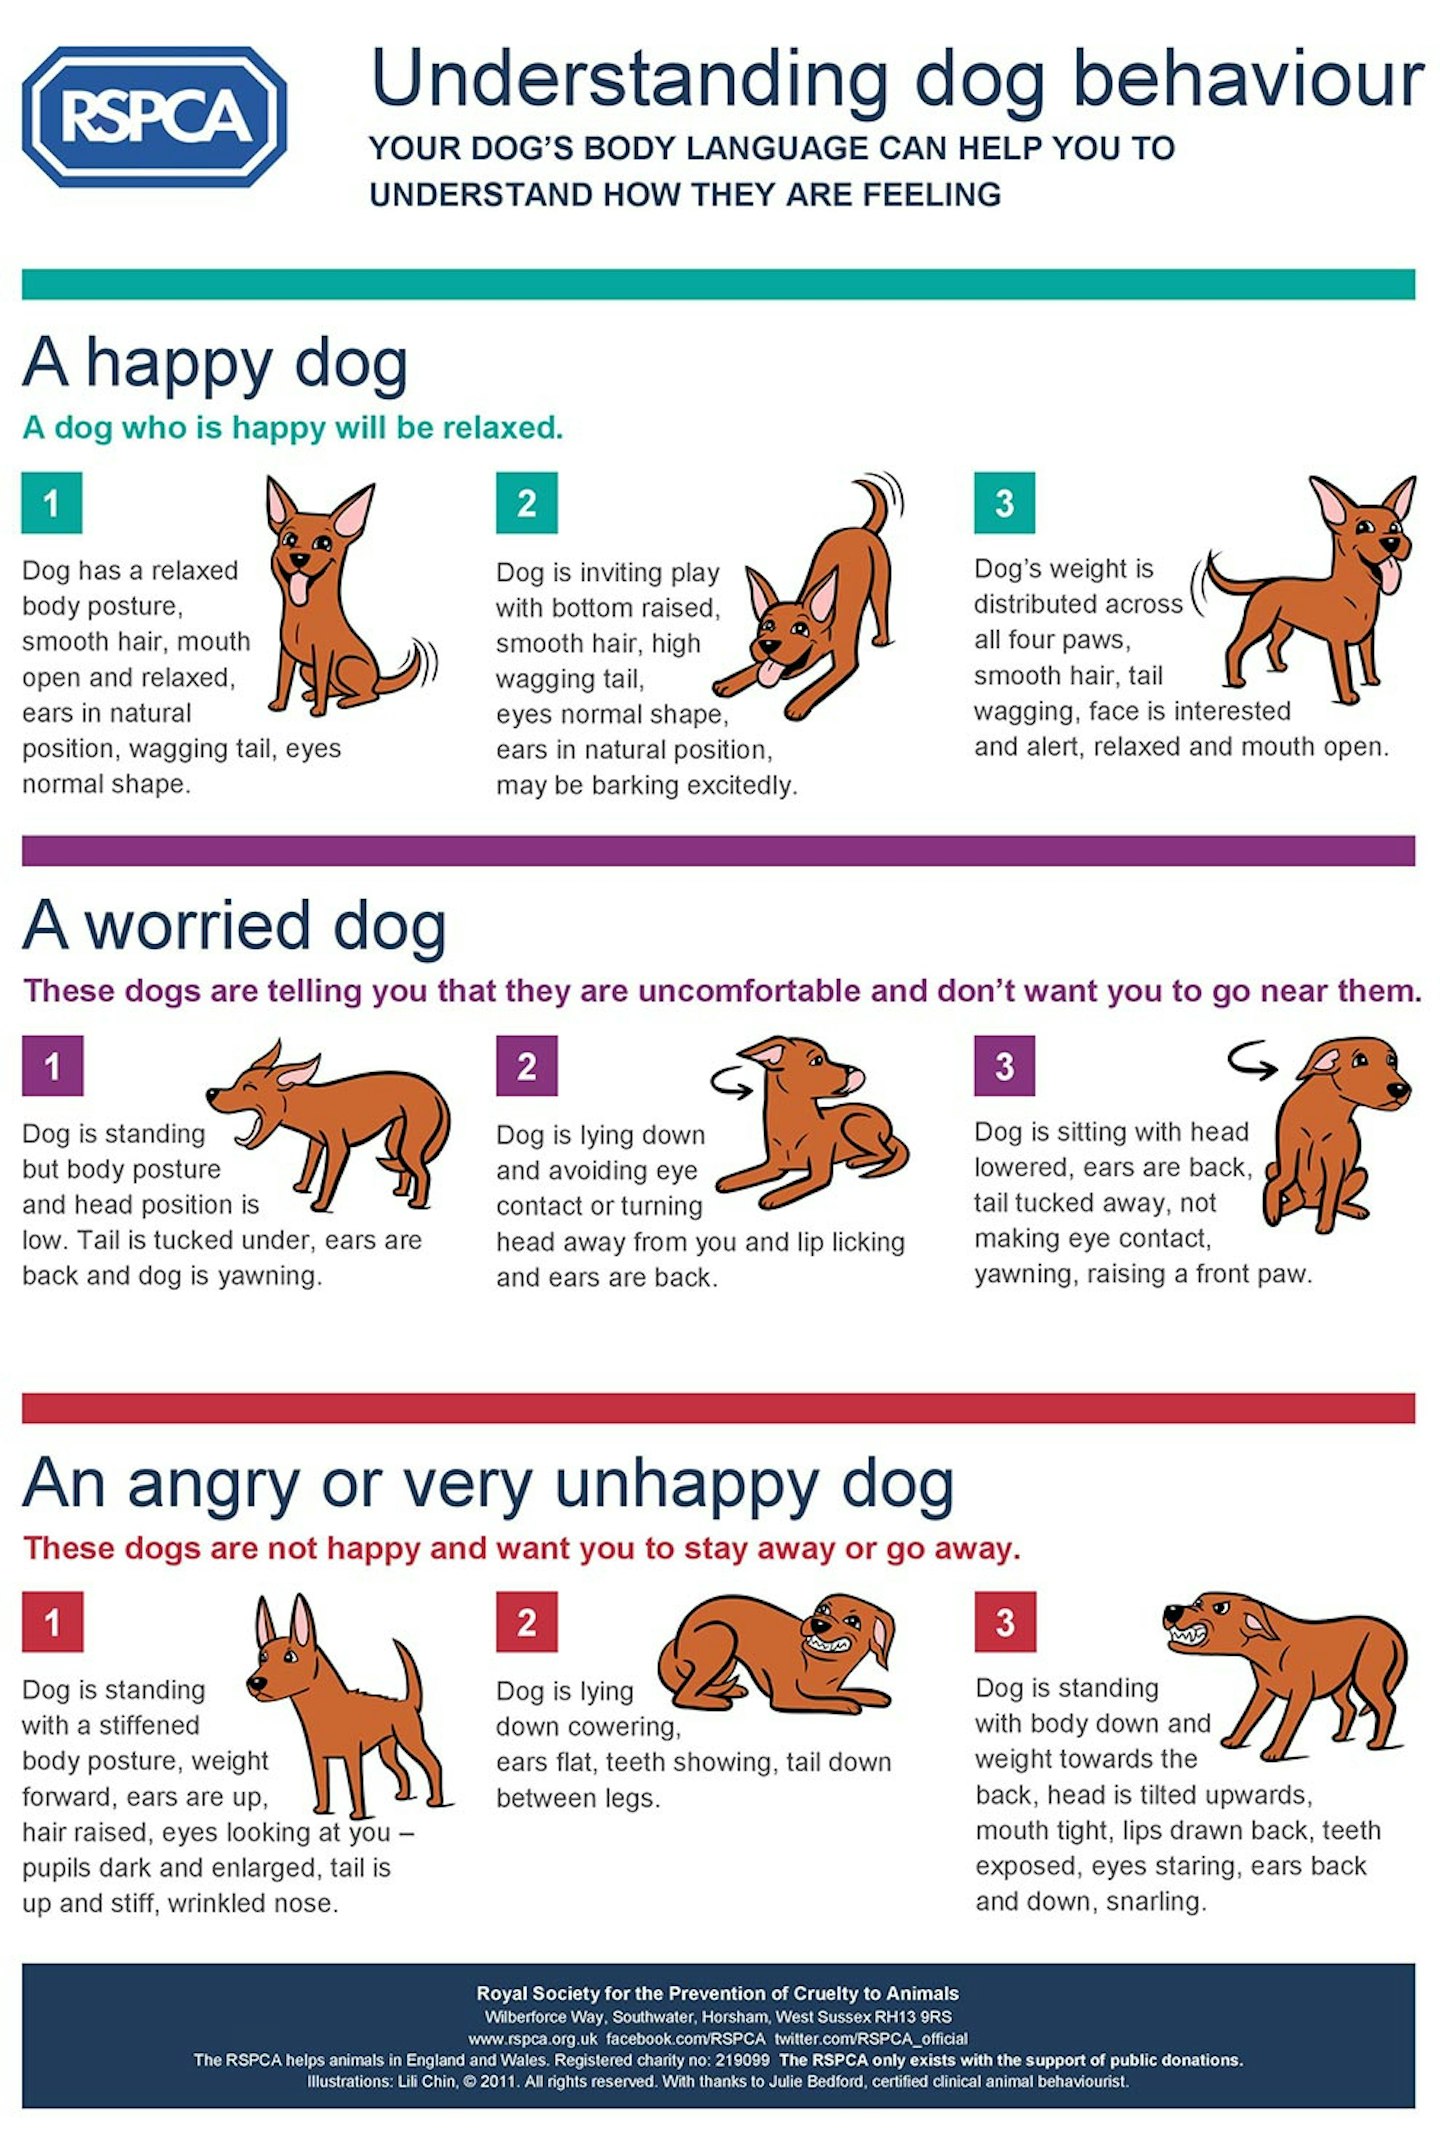 RSPCA dog behaviours 